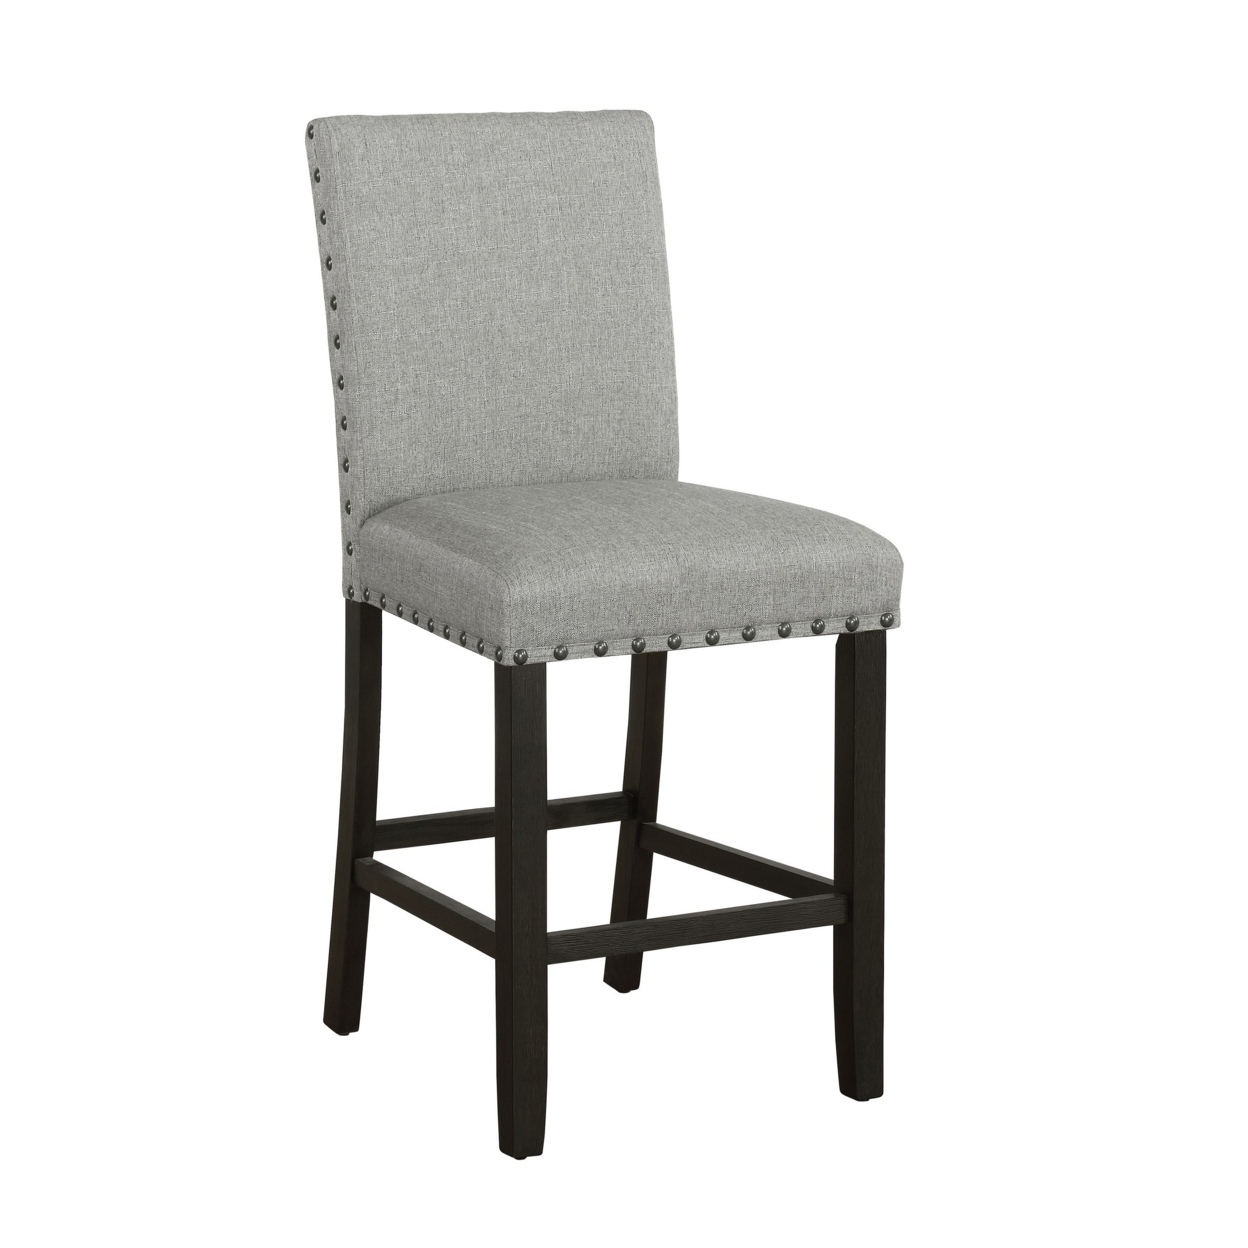 Gia 26 Inch Counter Stool Chair, Set Of 2, Parson Style, Woven Gray Fabric- Saltoro Sherpi